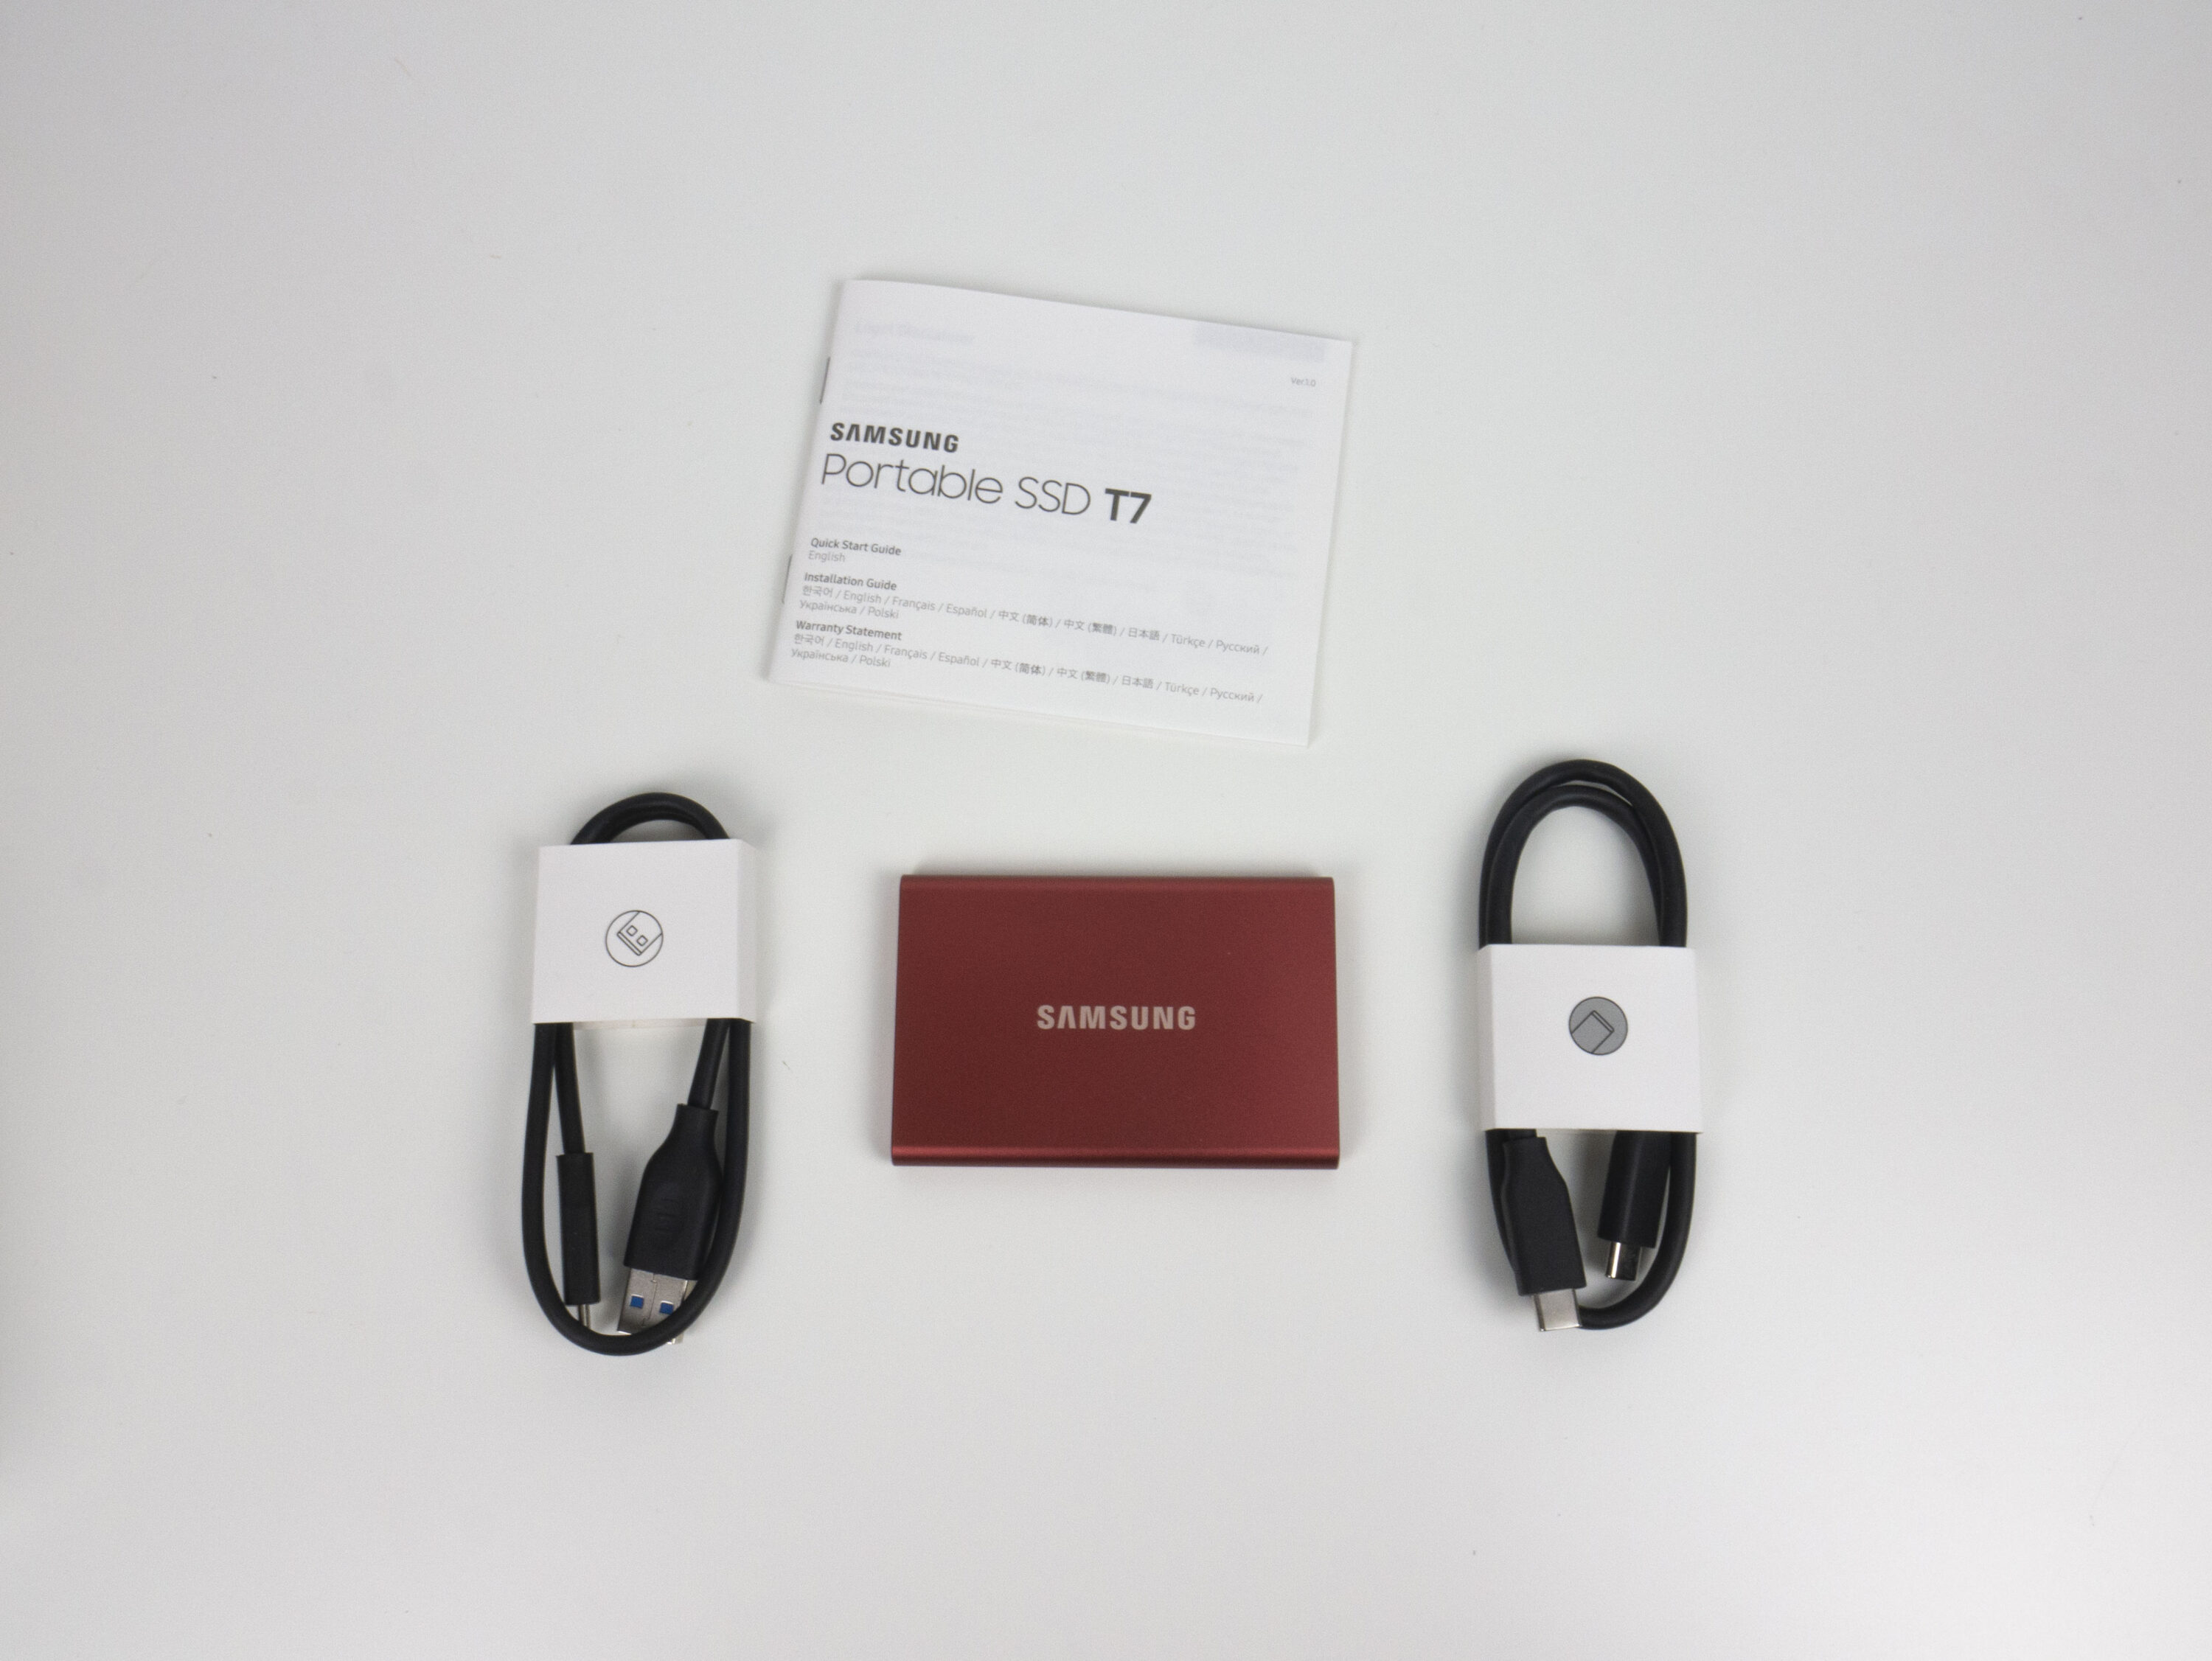 Samsung Portable SSD T7 im Test